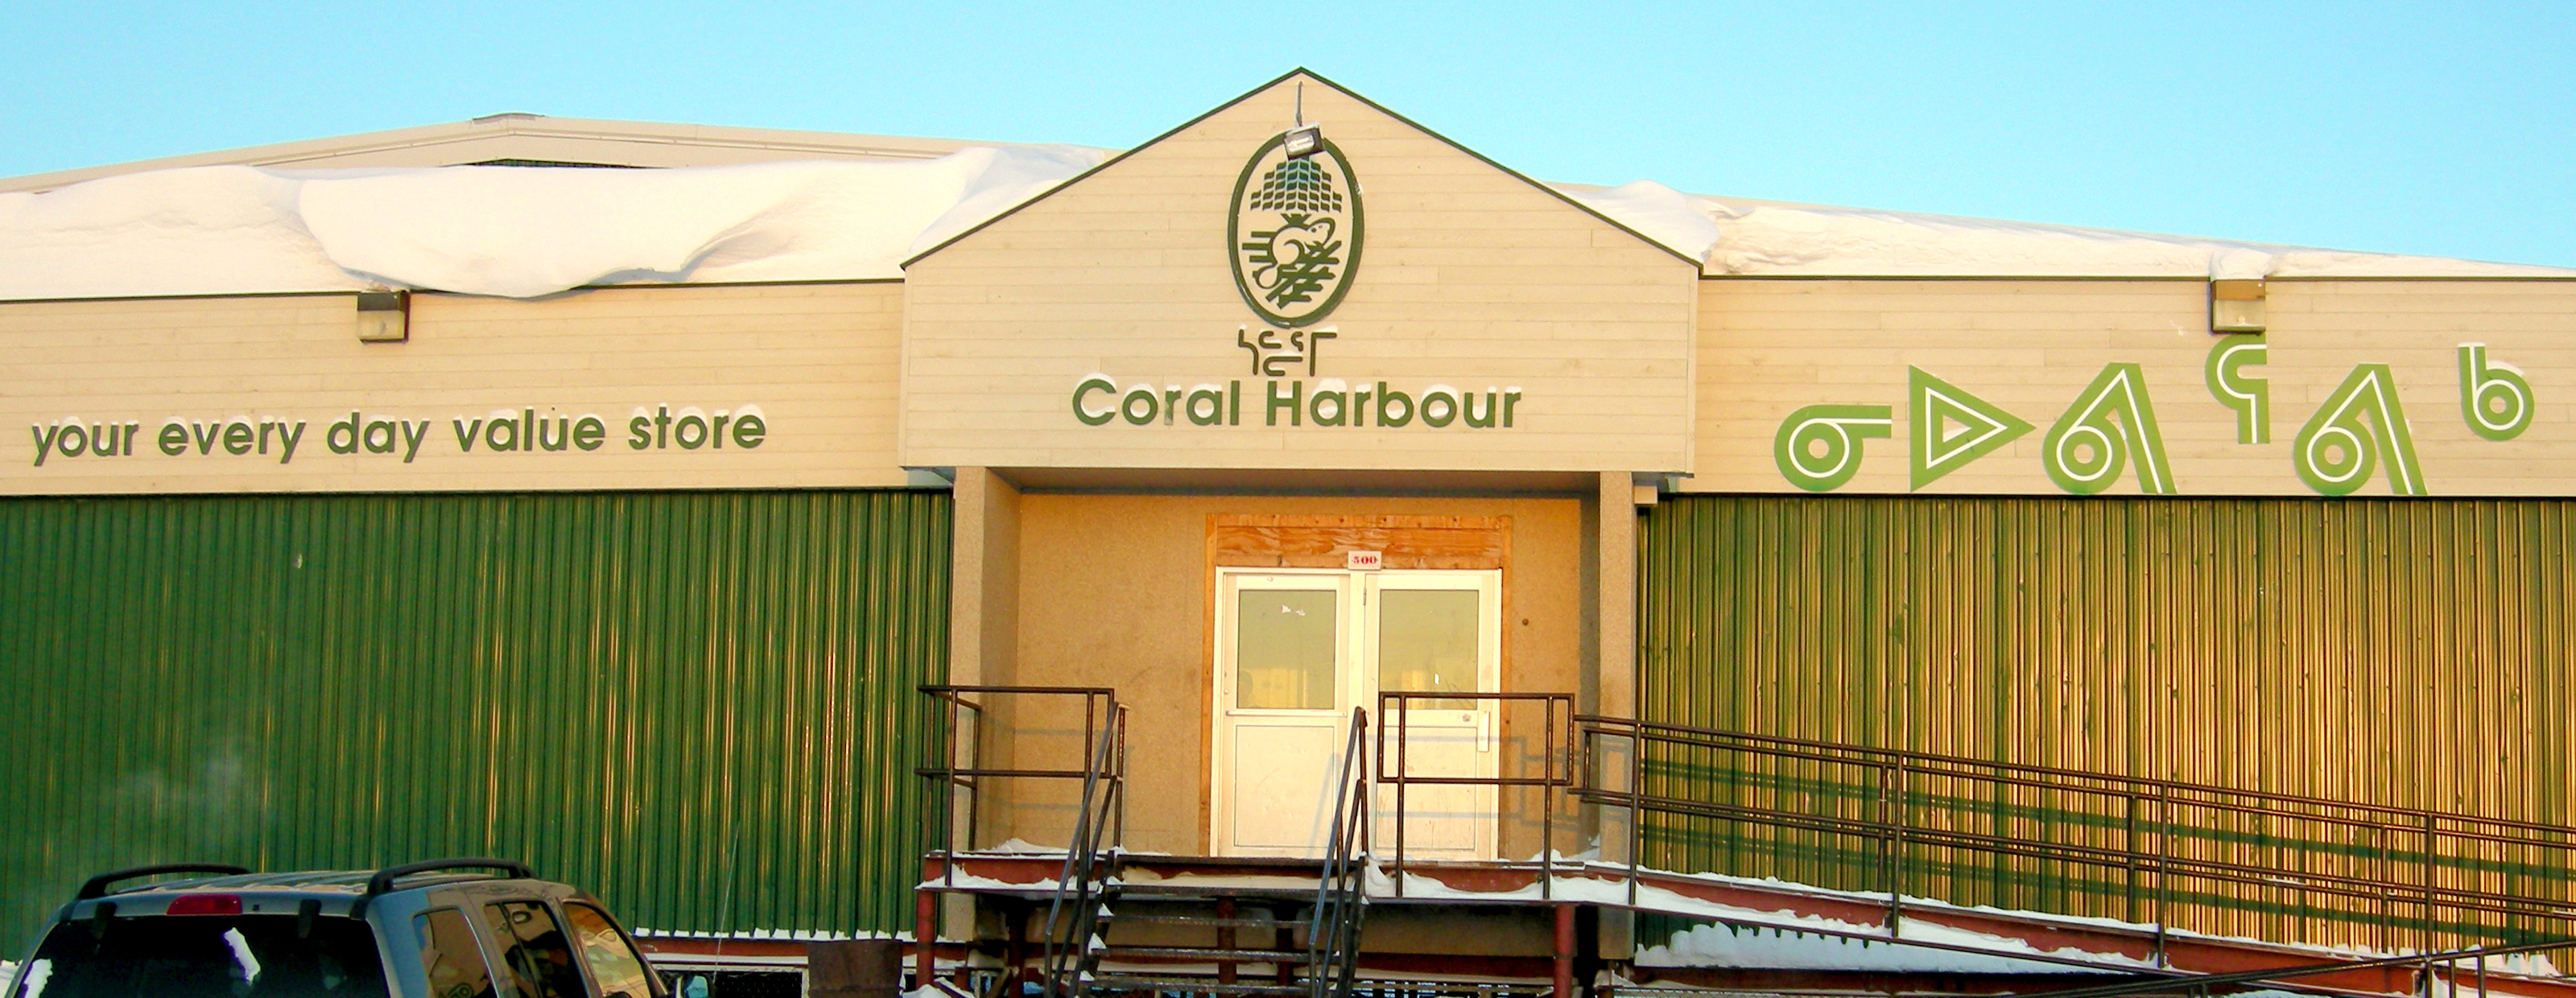 Coral Harbour.jpg (2.98 MB)